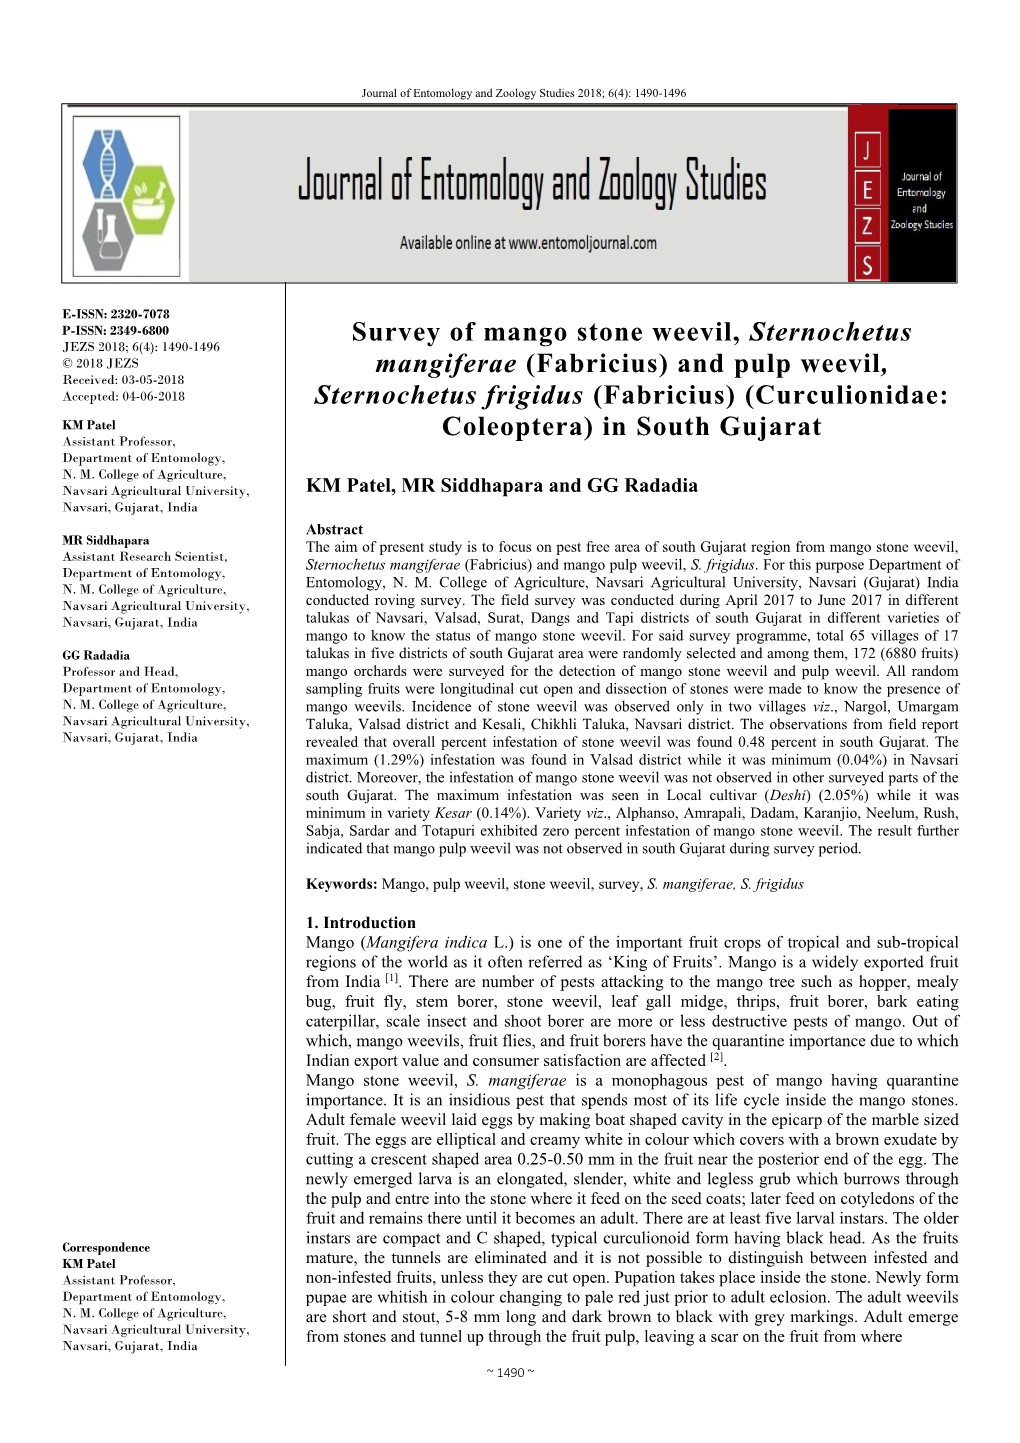 Survey of Mango Stone Weevil, Sternochetus Mangiferae (Fabricius